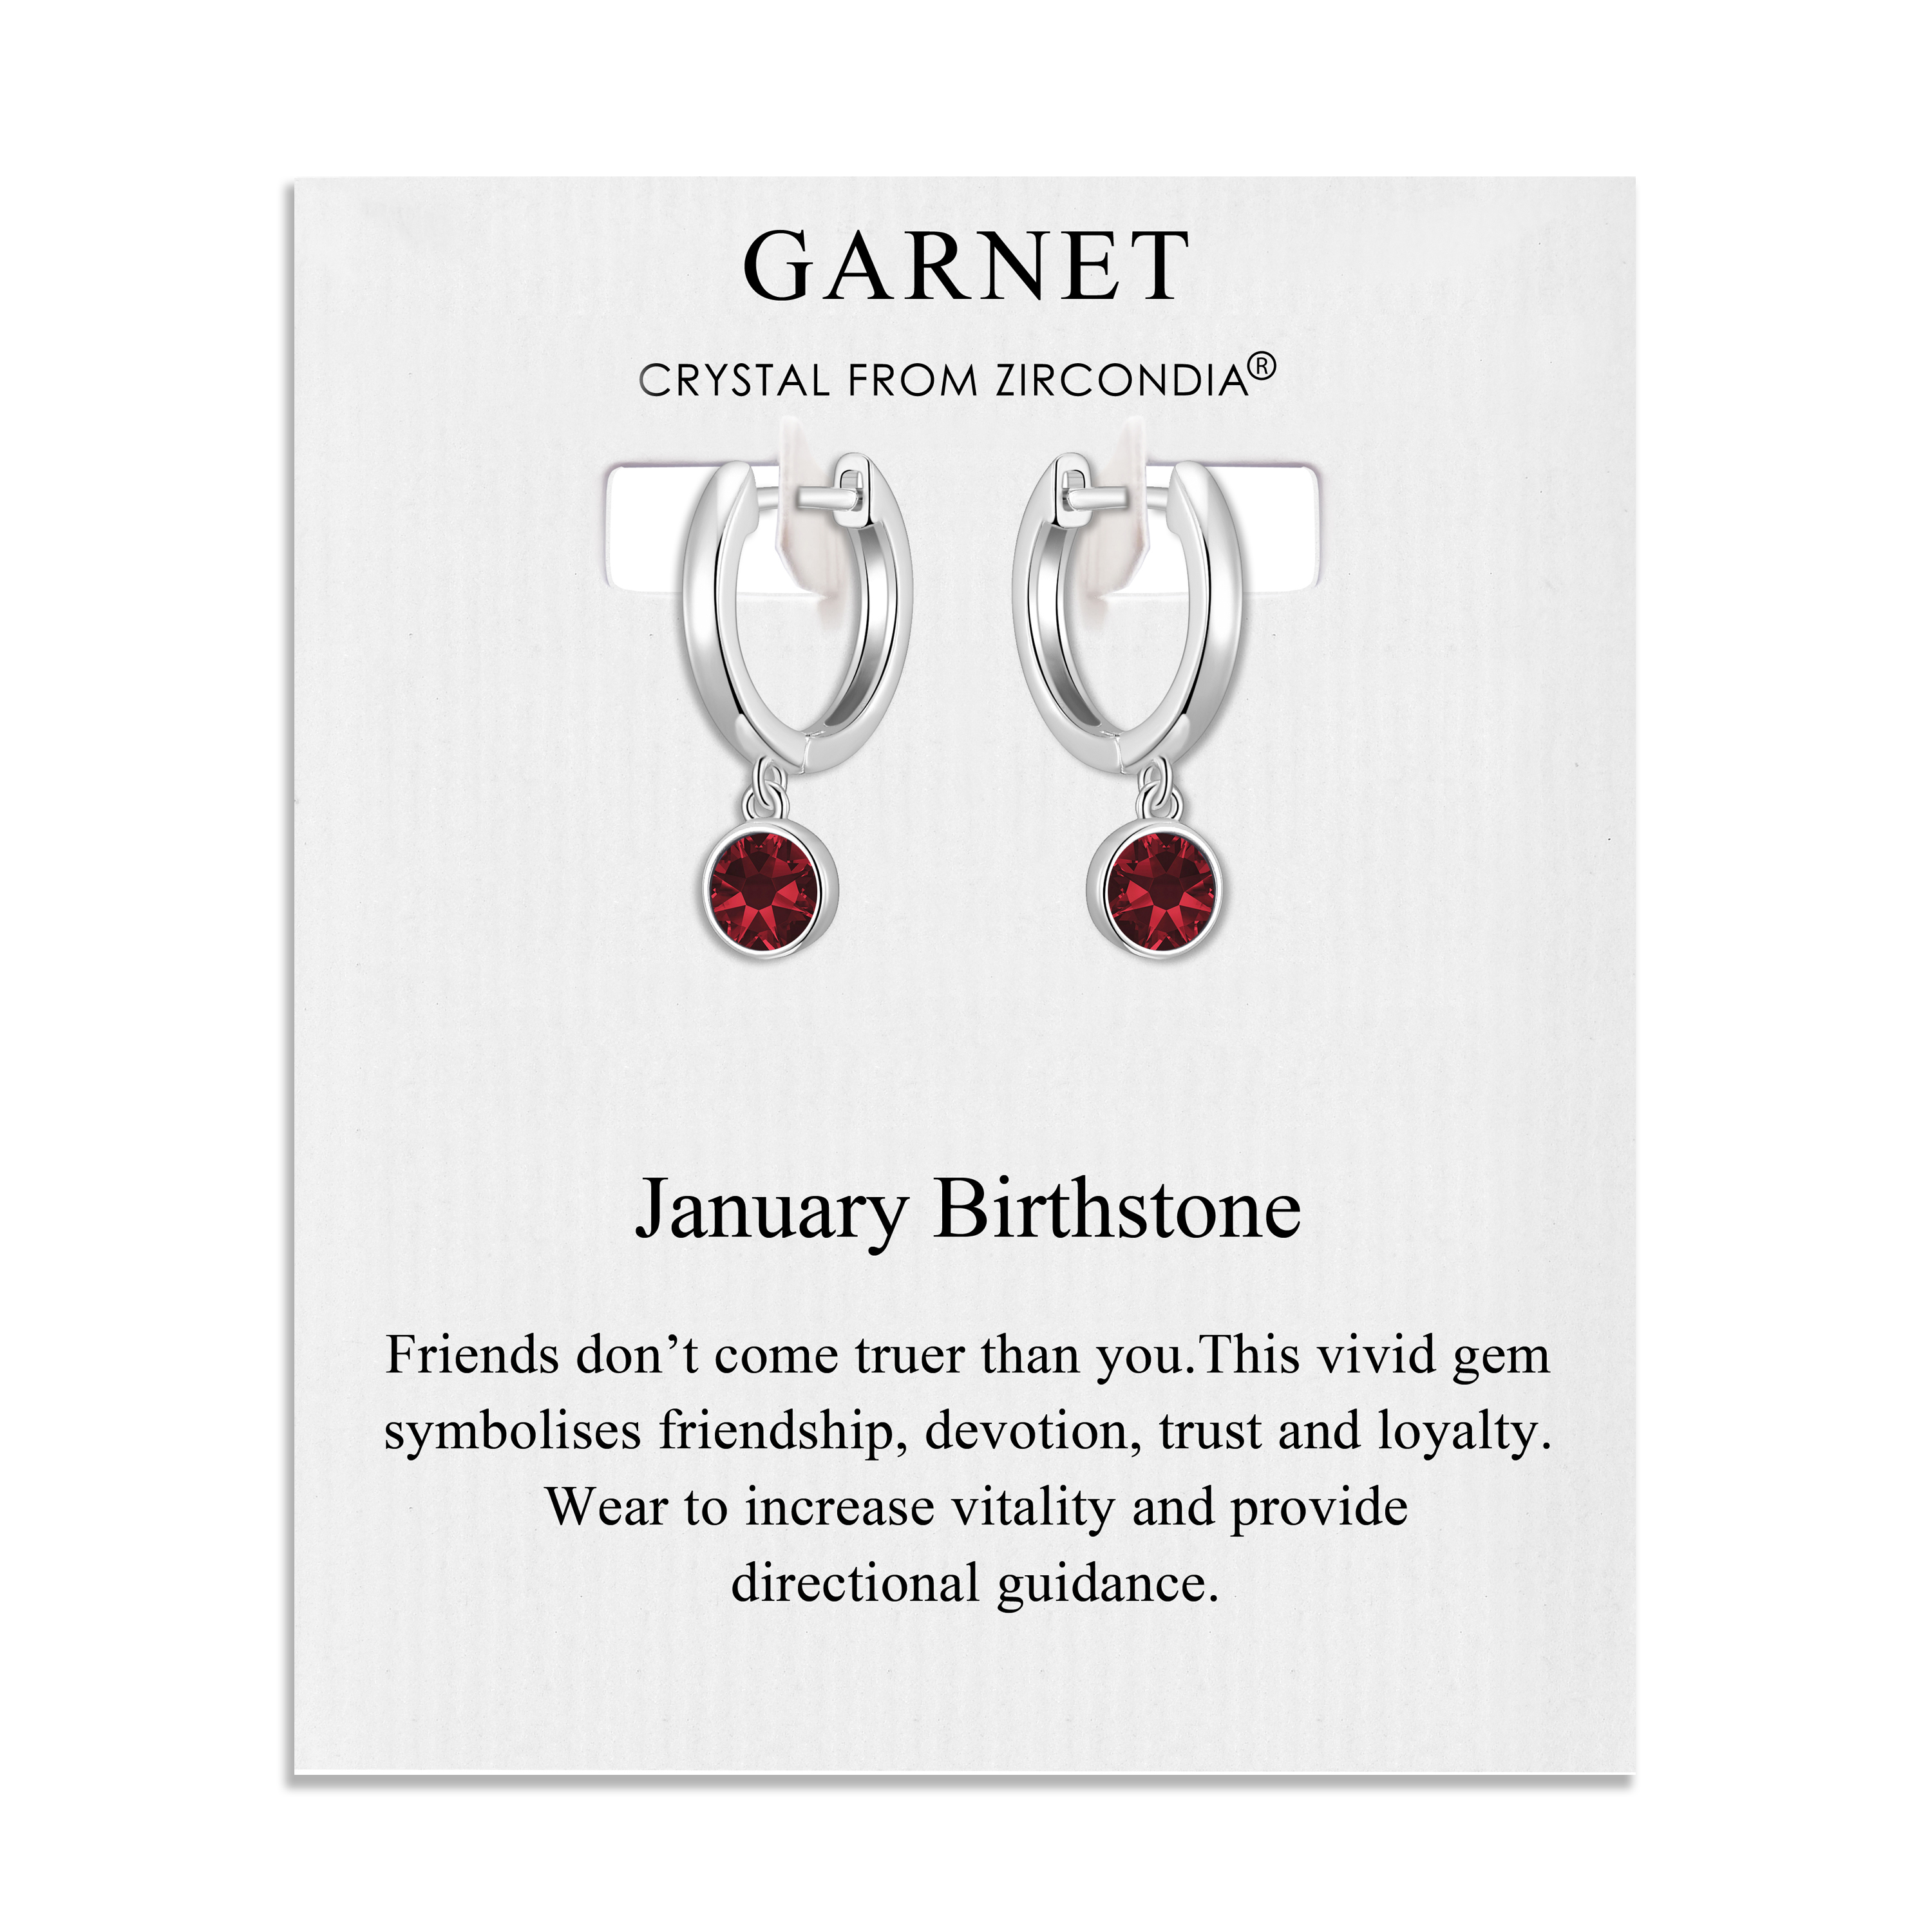 January Birthstone Hoop Earrings Created with Garnet Zircondia® Crystals by Philip Jones Jewellery